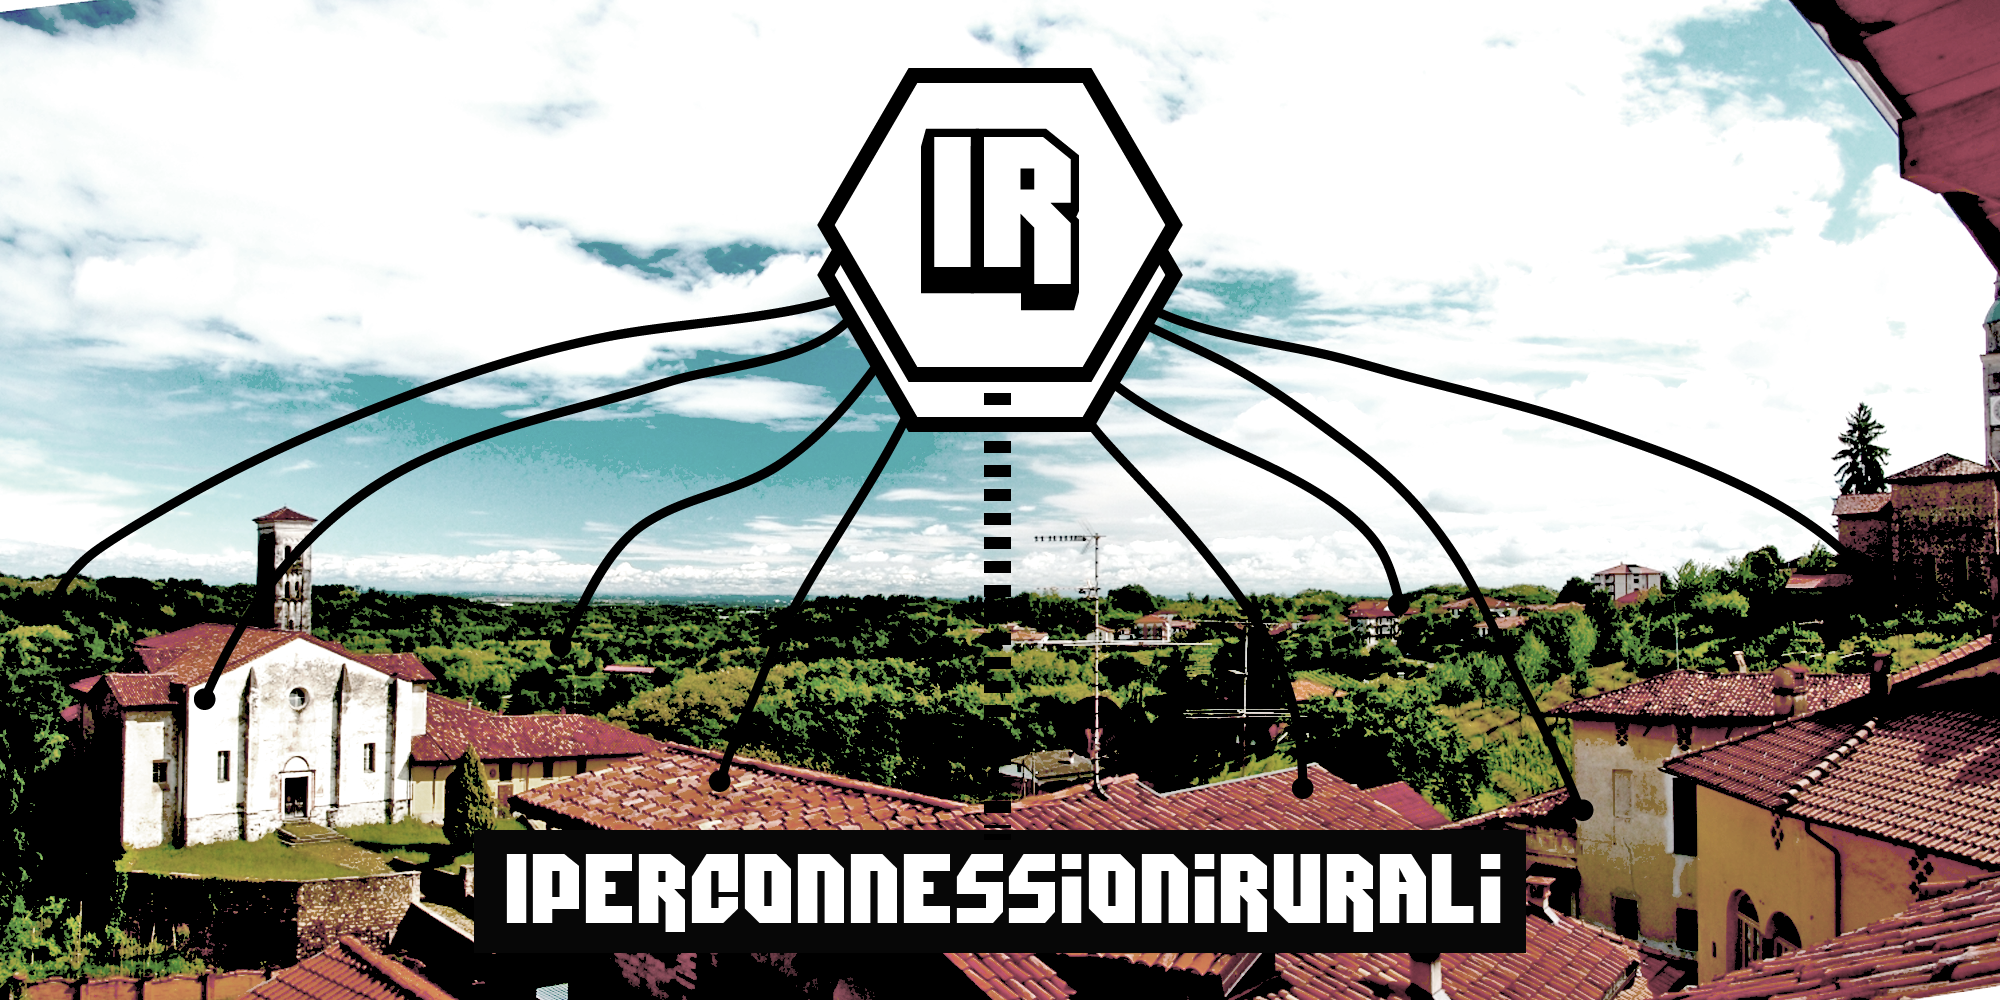 IperConnessioni Rurali, the workshop